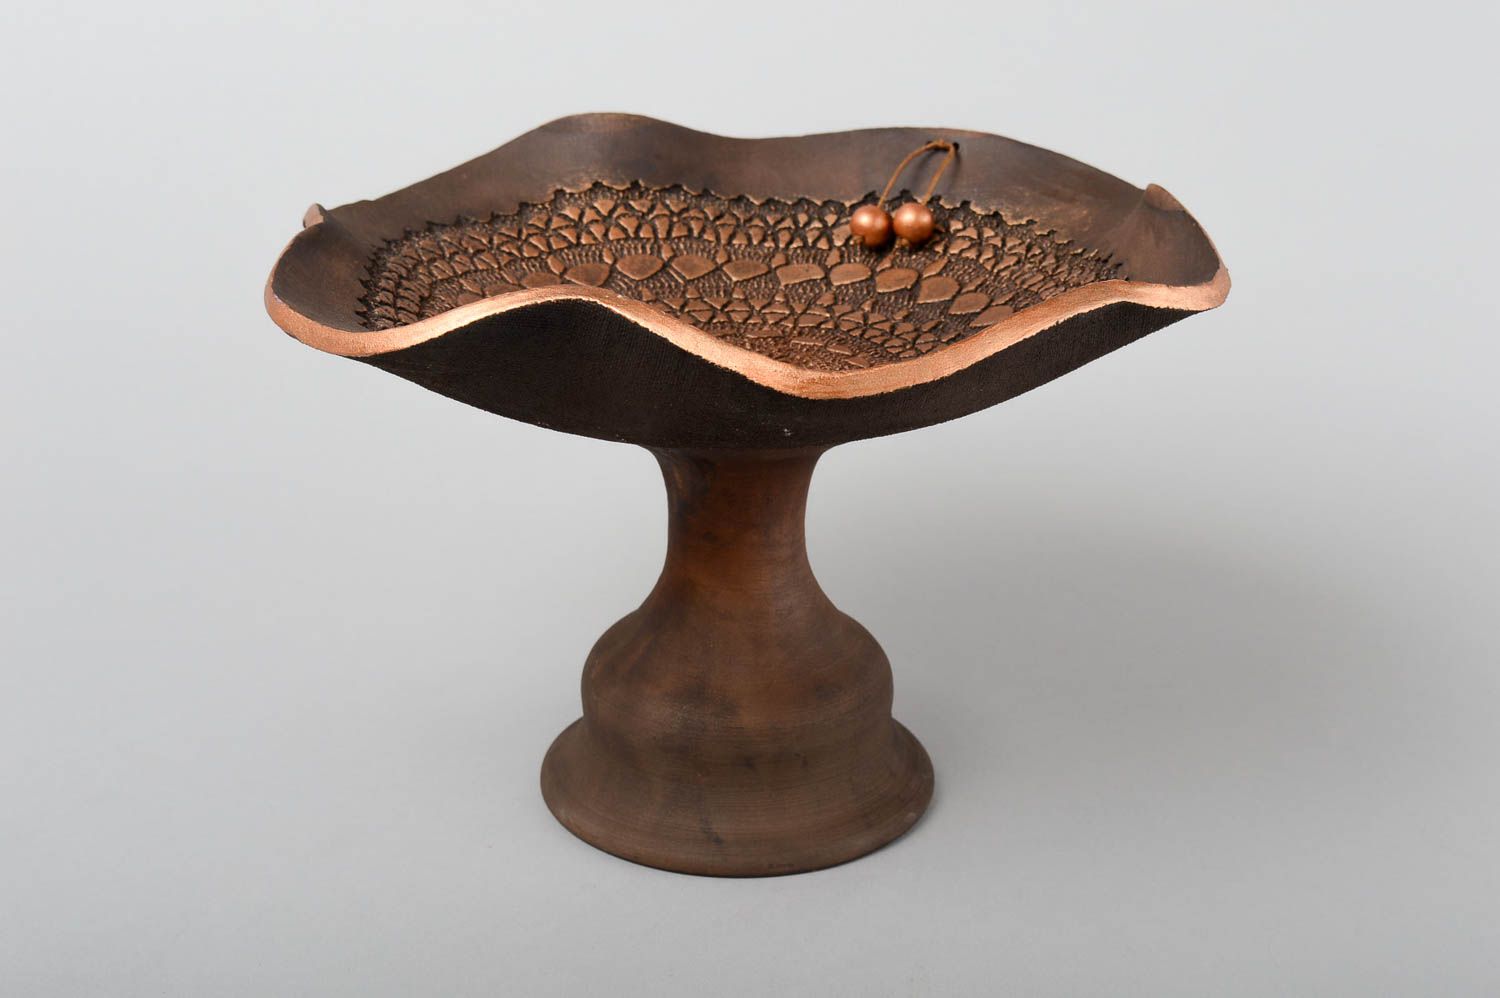 Unusual handmade ceramic fruit bowl tableware ideas pottery works gift ideas photo 2